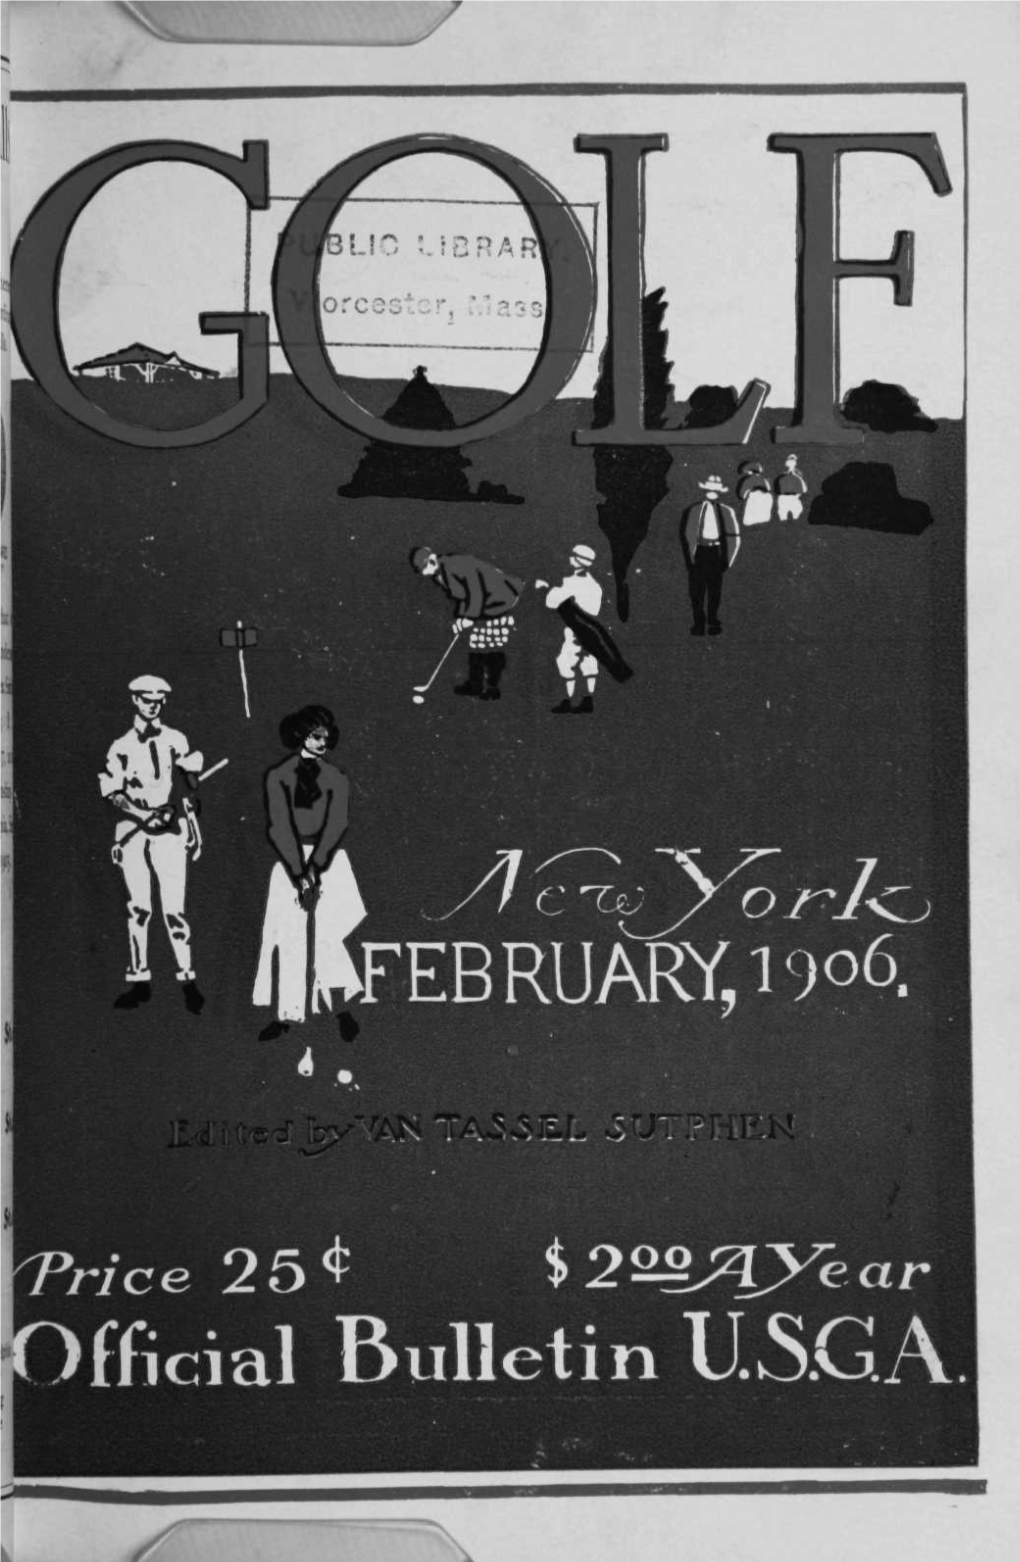 FEBRUARY, 1906. Official Bulletin U.S.GA